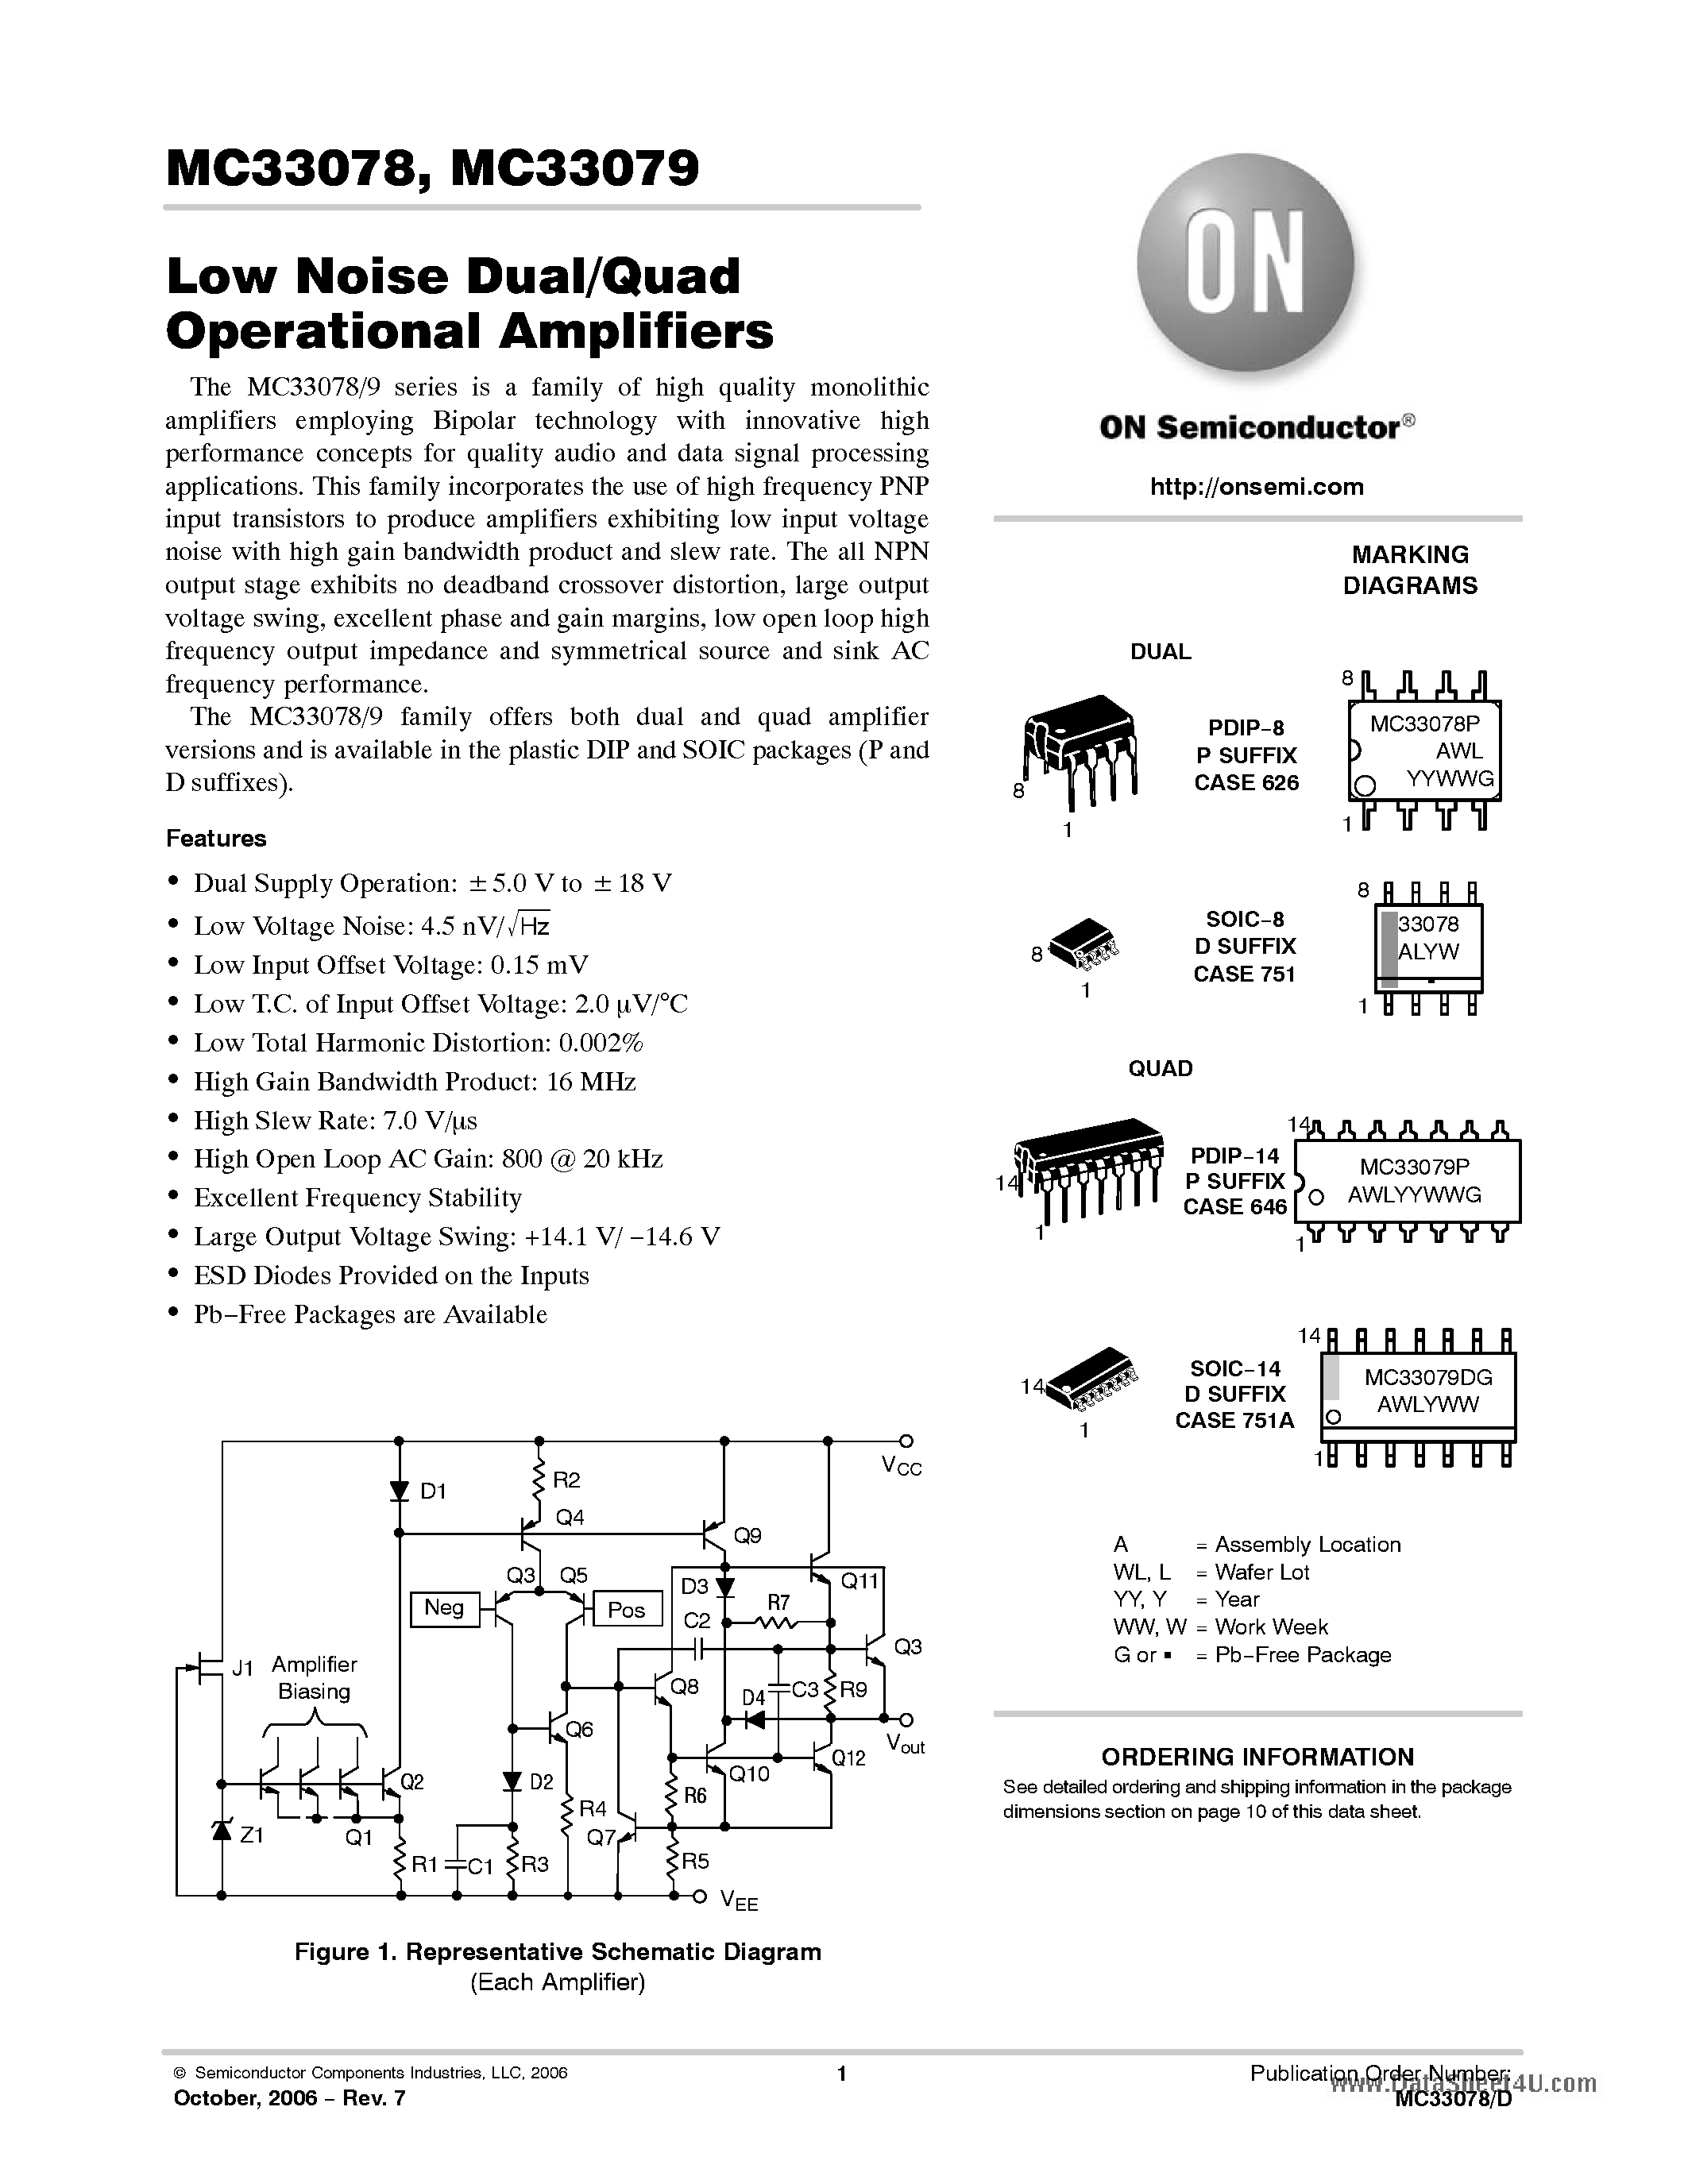 Даташит MC33078 - (MC33078 / MC33079) Low Noise Dual/Quad Operational Amplifiers страница 1